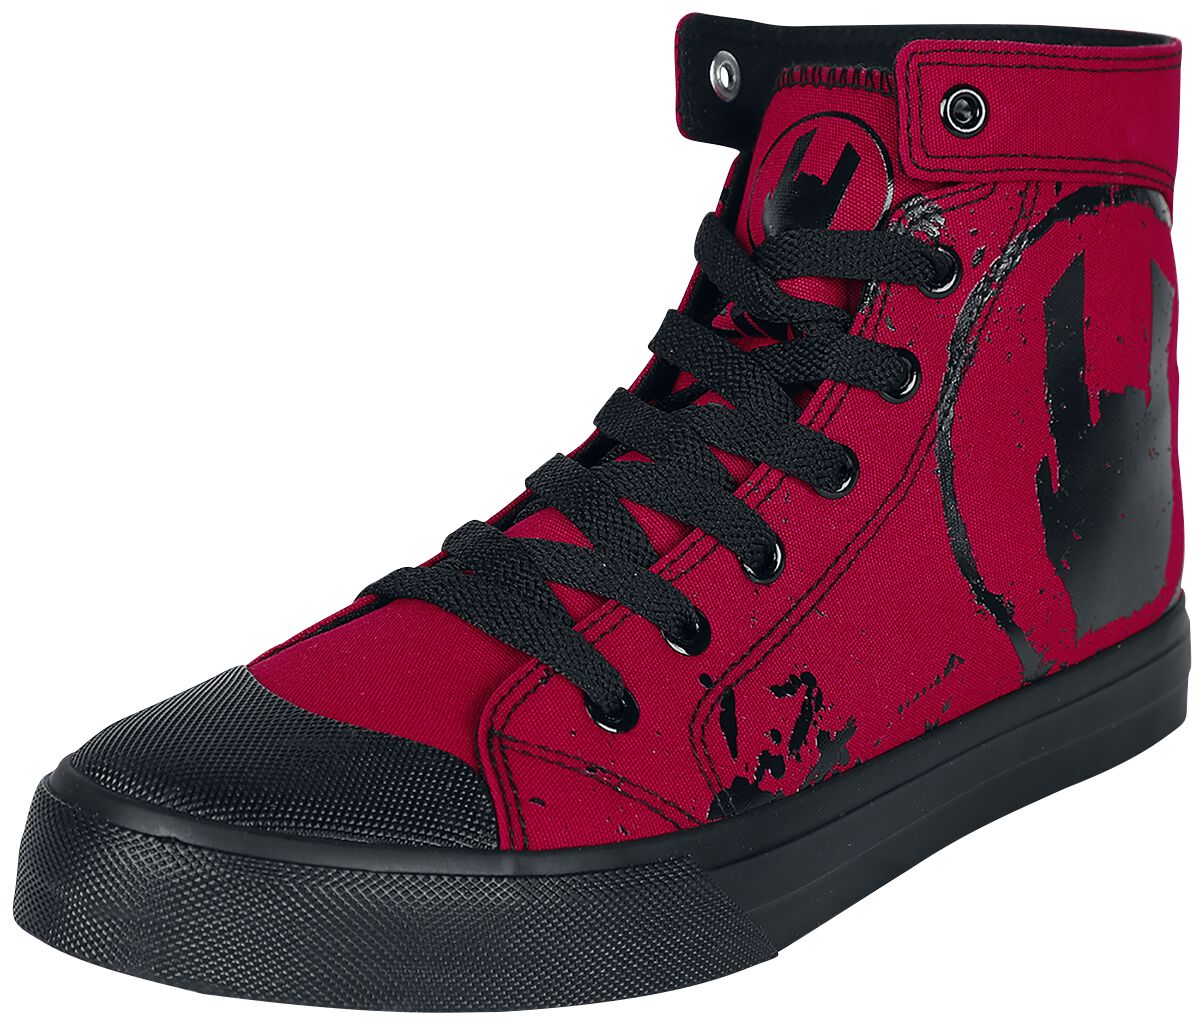 EMP Basic Collection Sneaker high - Rote Sneaker mit Rockhand-Print - EU37 bis EU39 - Größe EU38 - rot